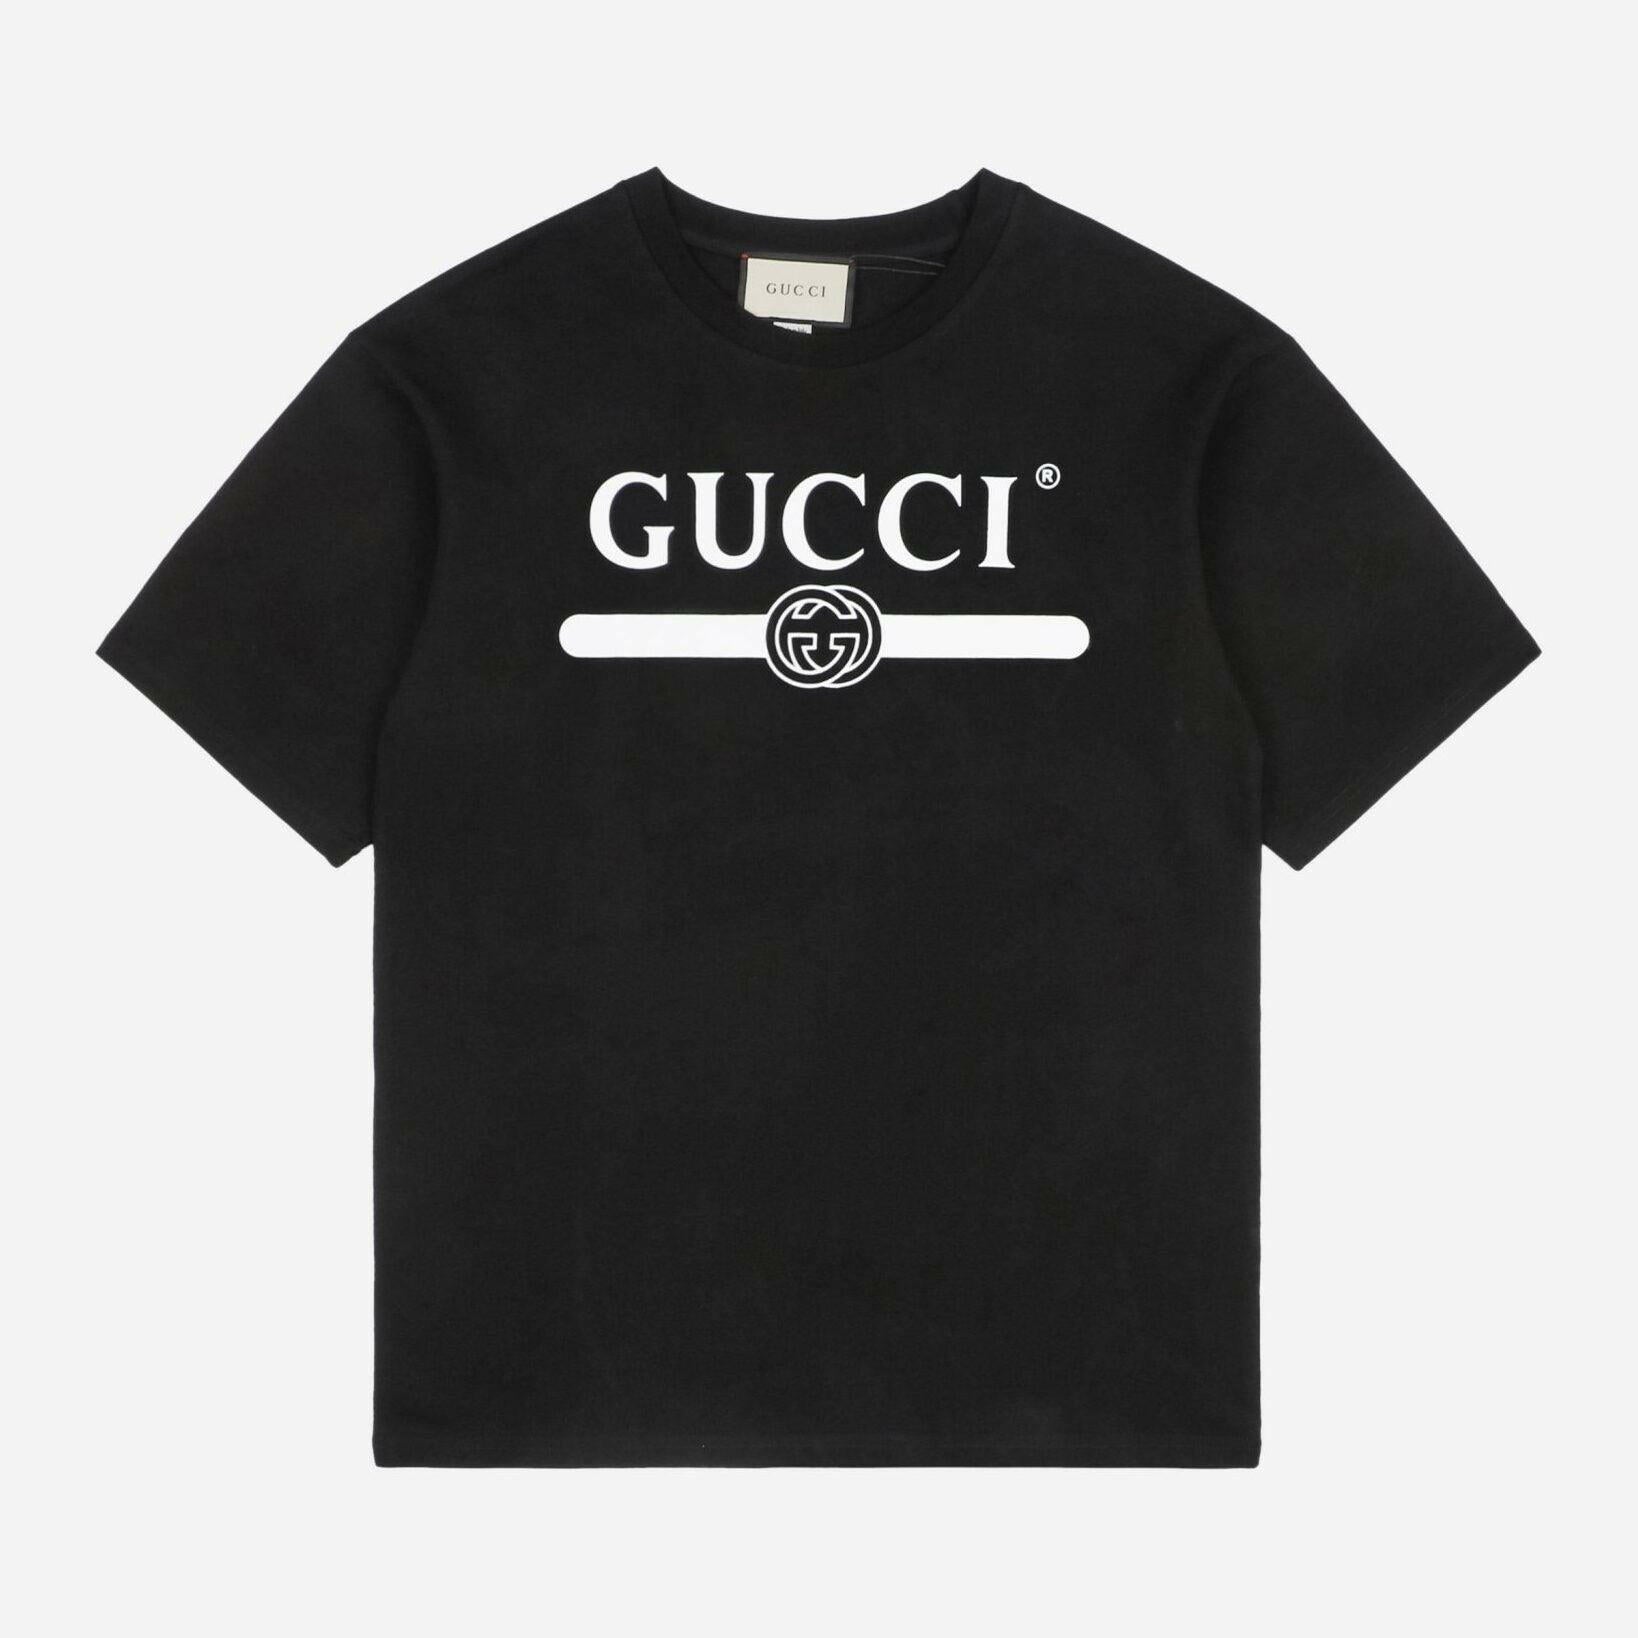 Gucci shirts for men (roblox codes)